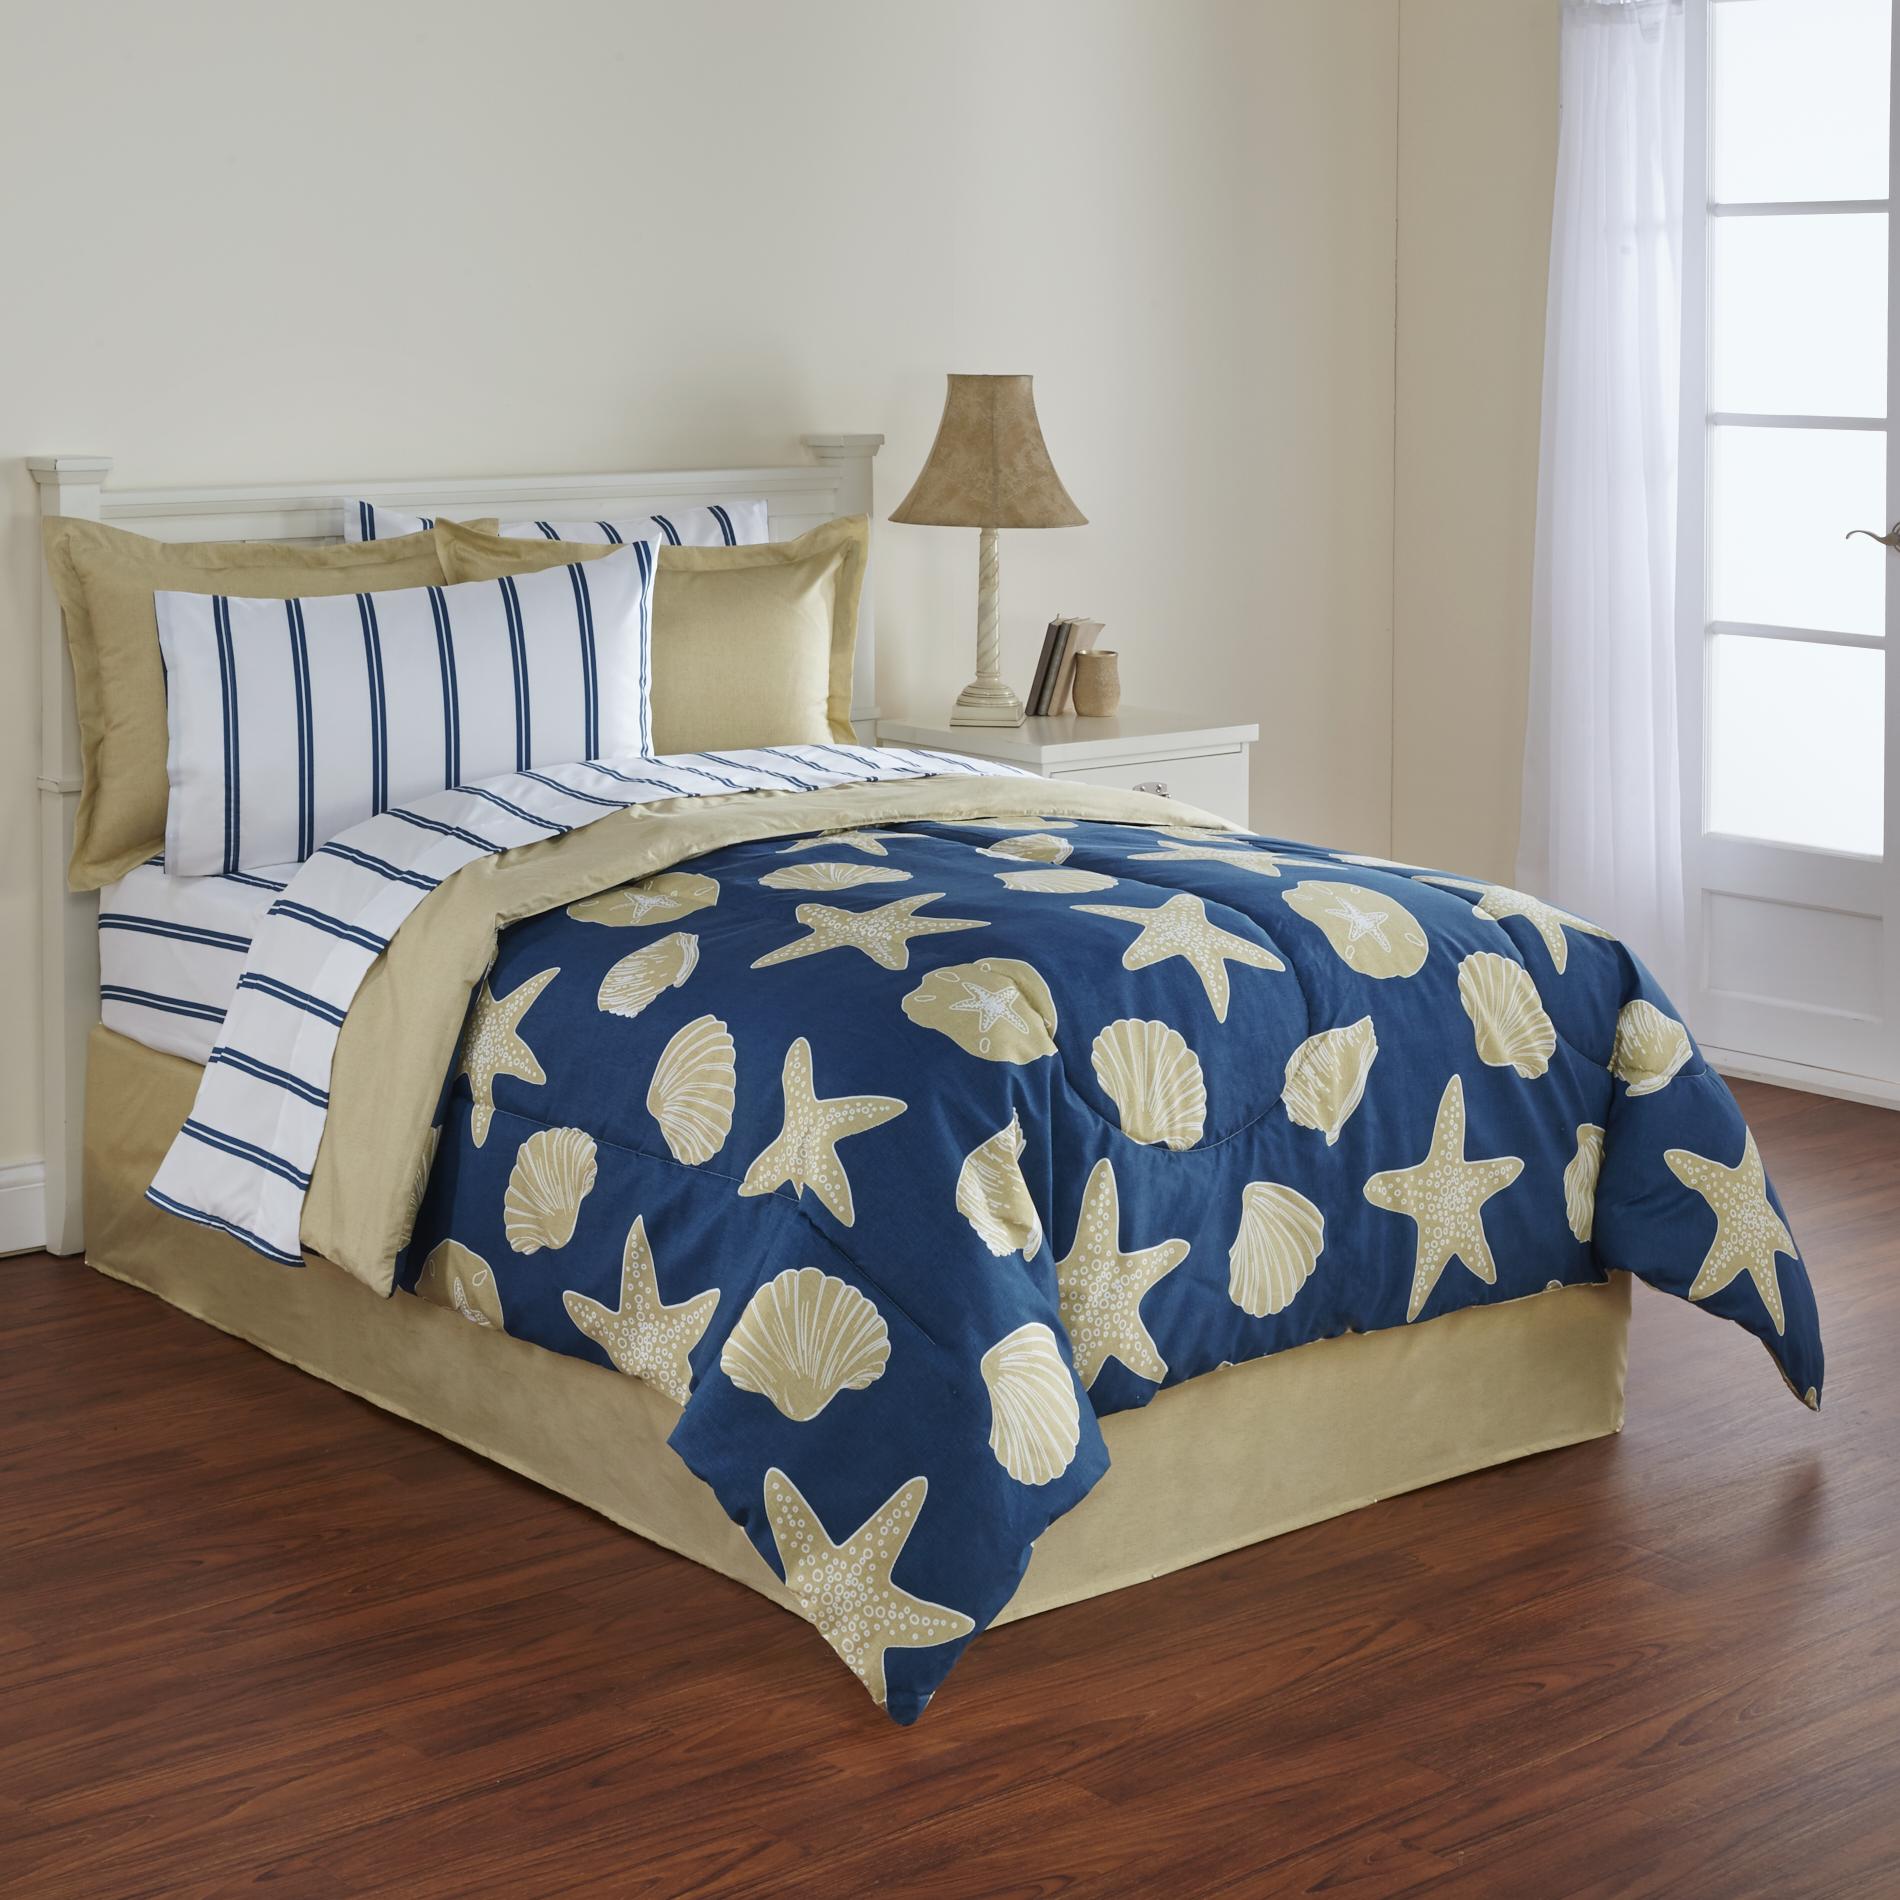 Stylish Comforter Sets